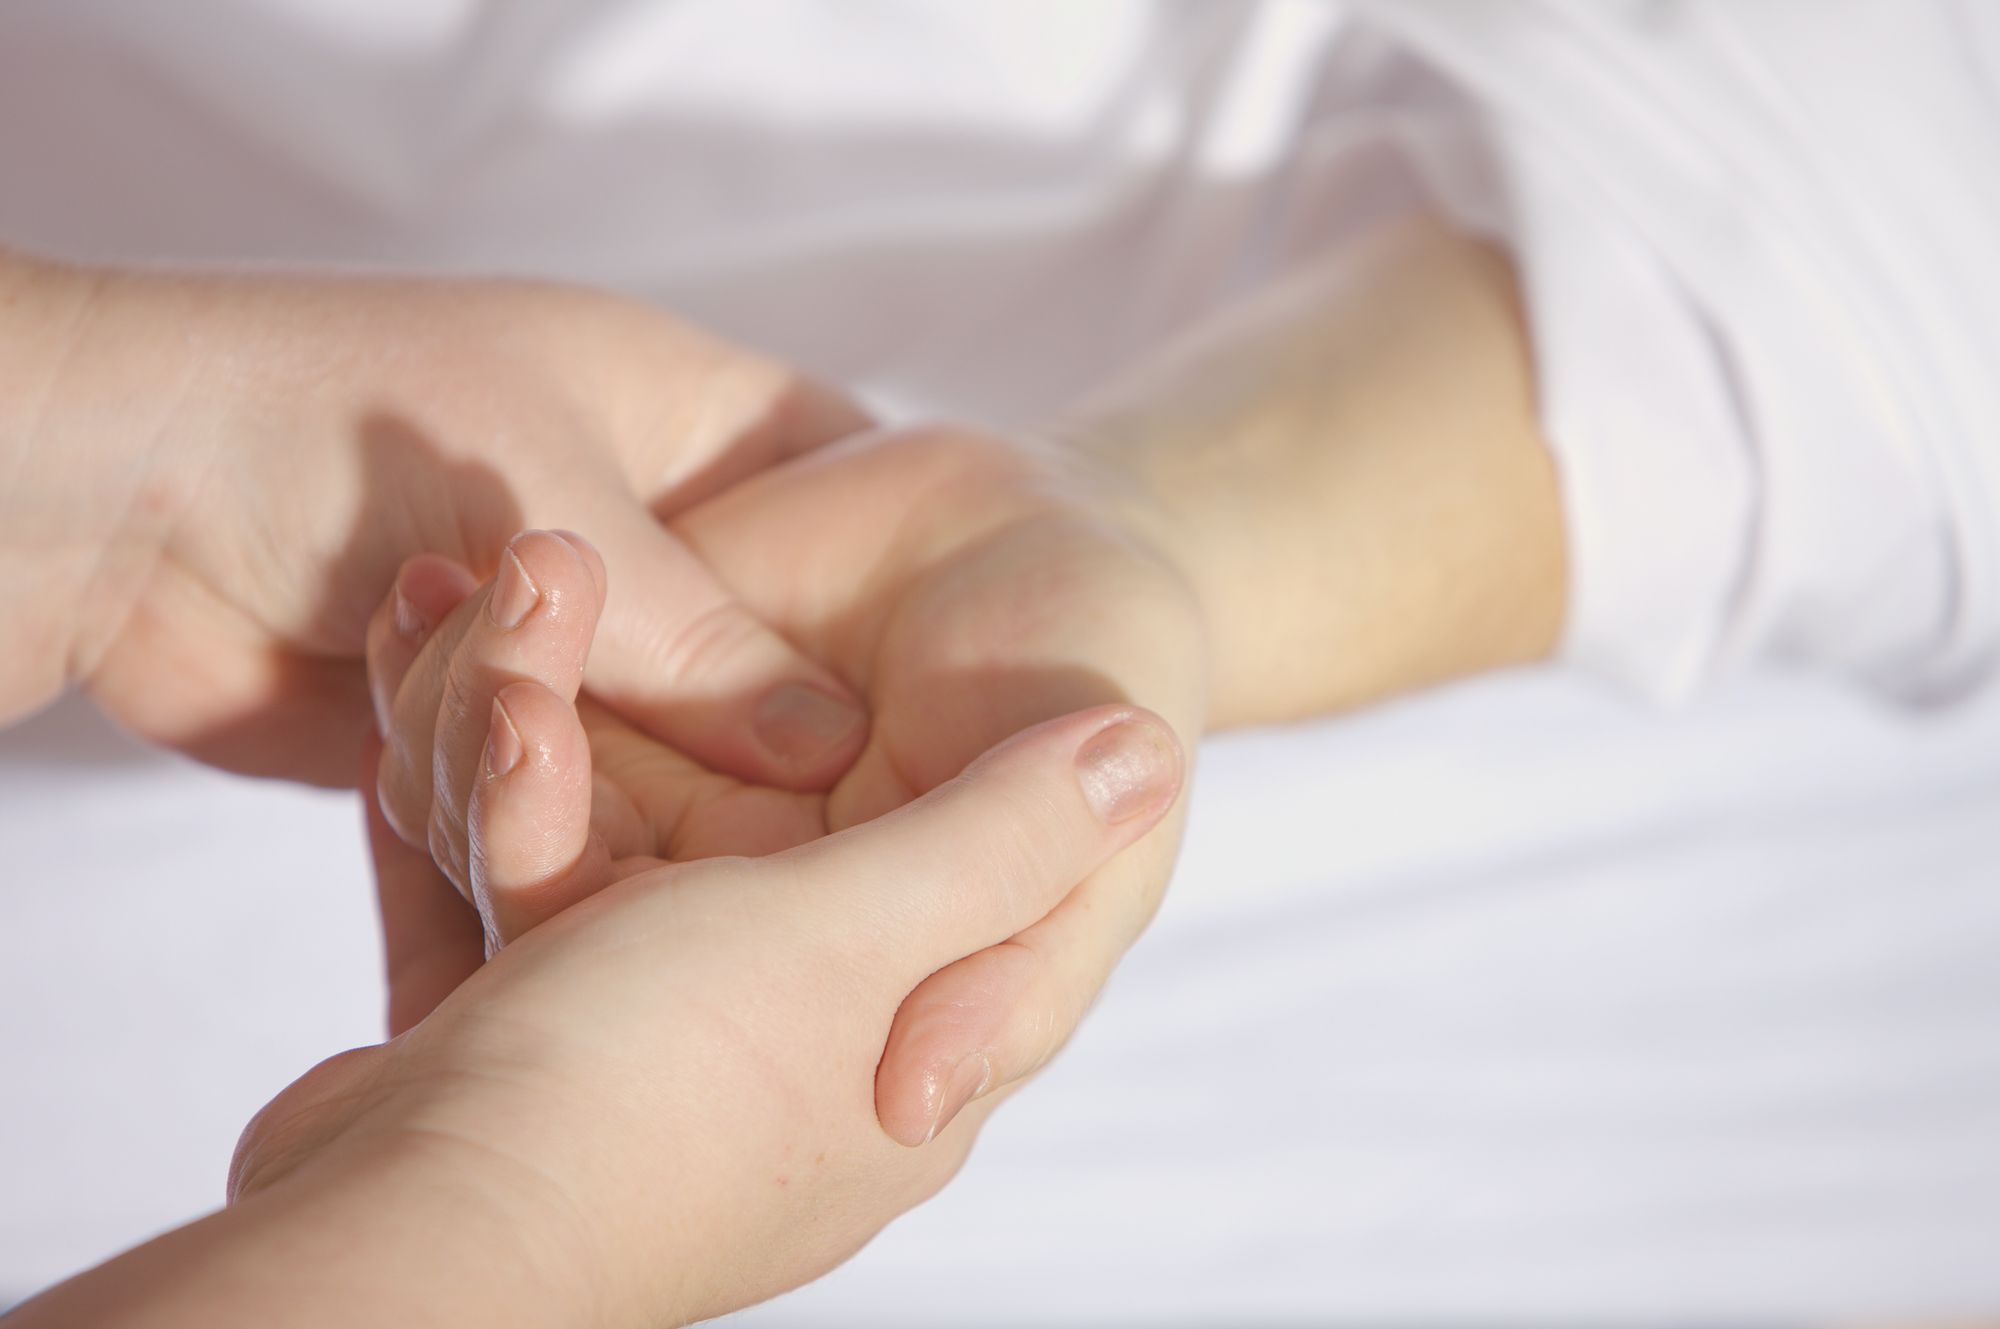 Oferiți persoanei un masaj al mâinilor